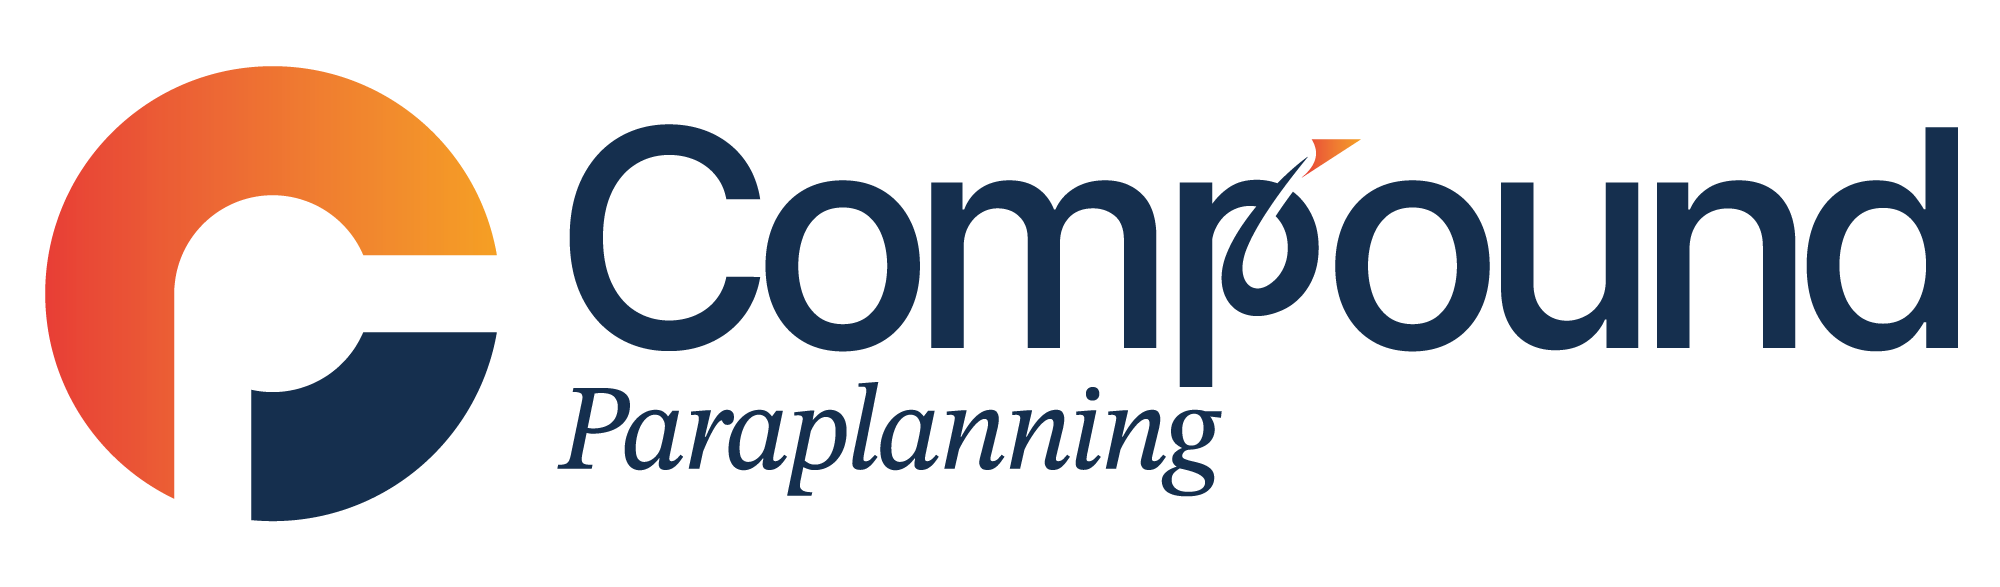 compound paraplanning full logo